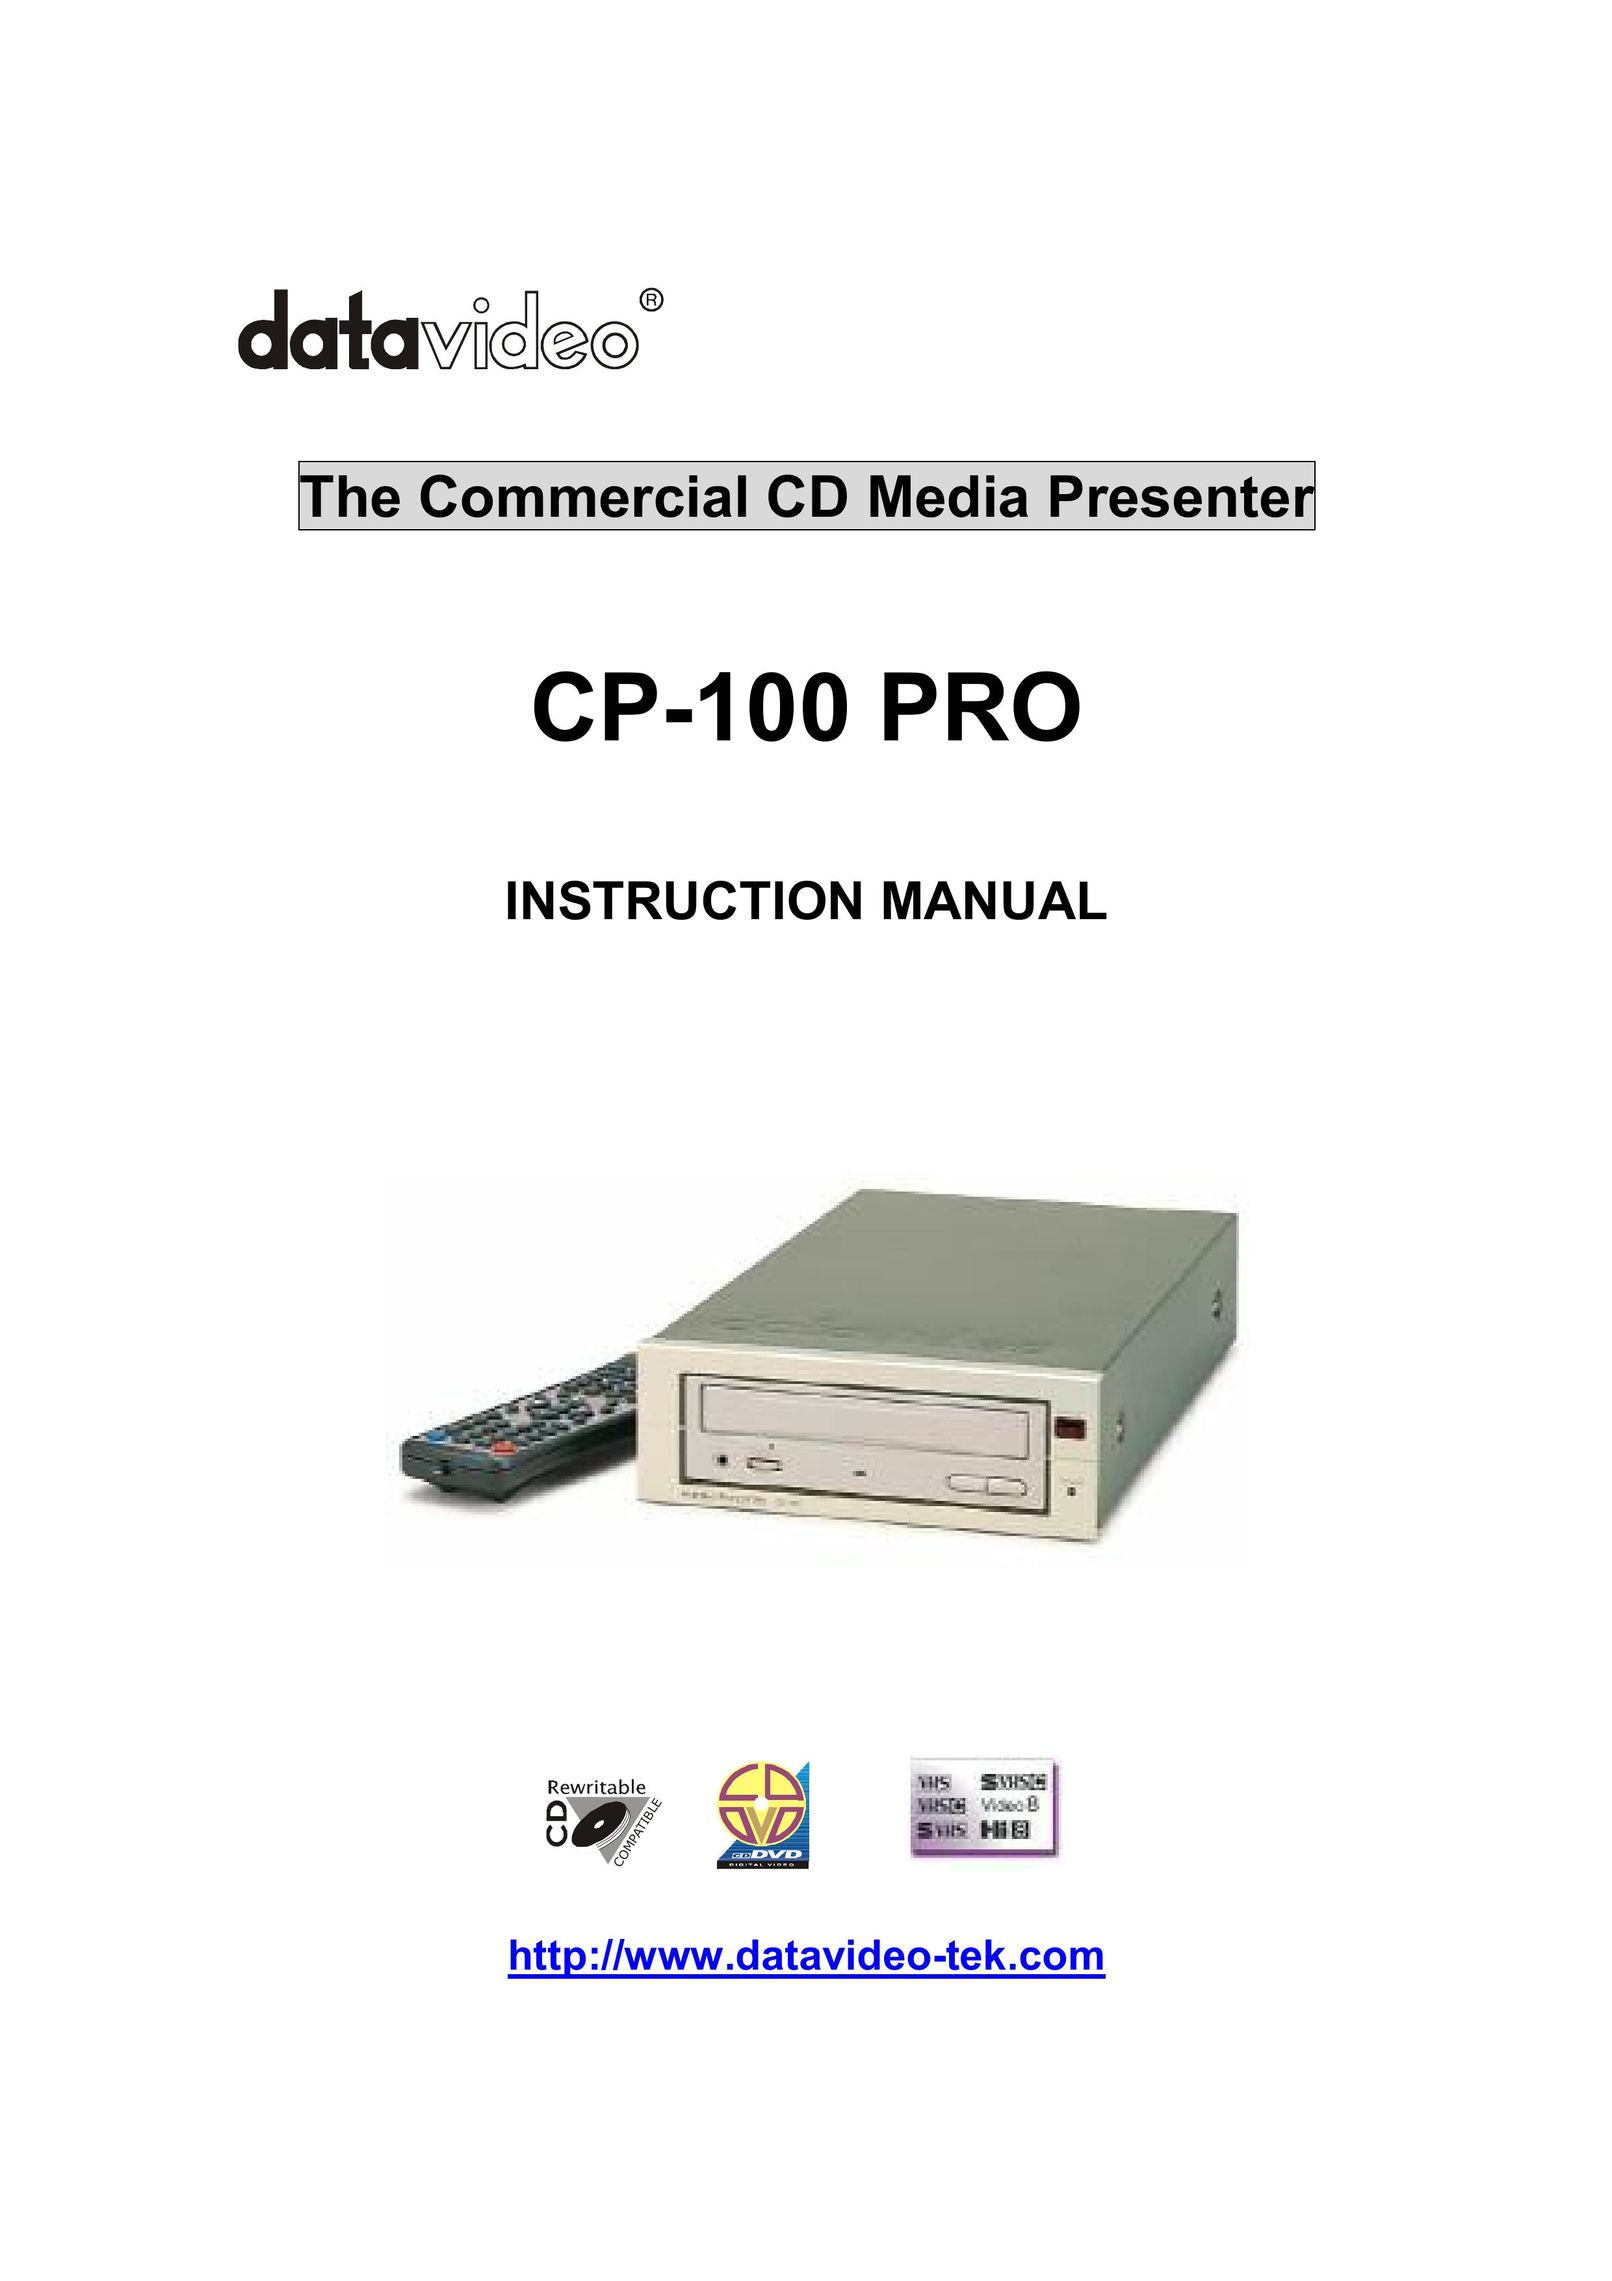 Datavideo CP-100 PRO CD Player User Manual